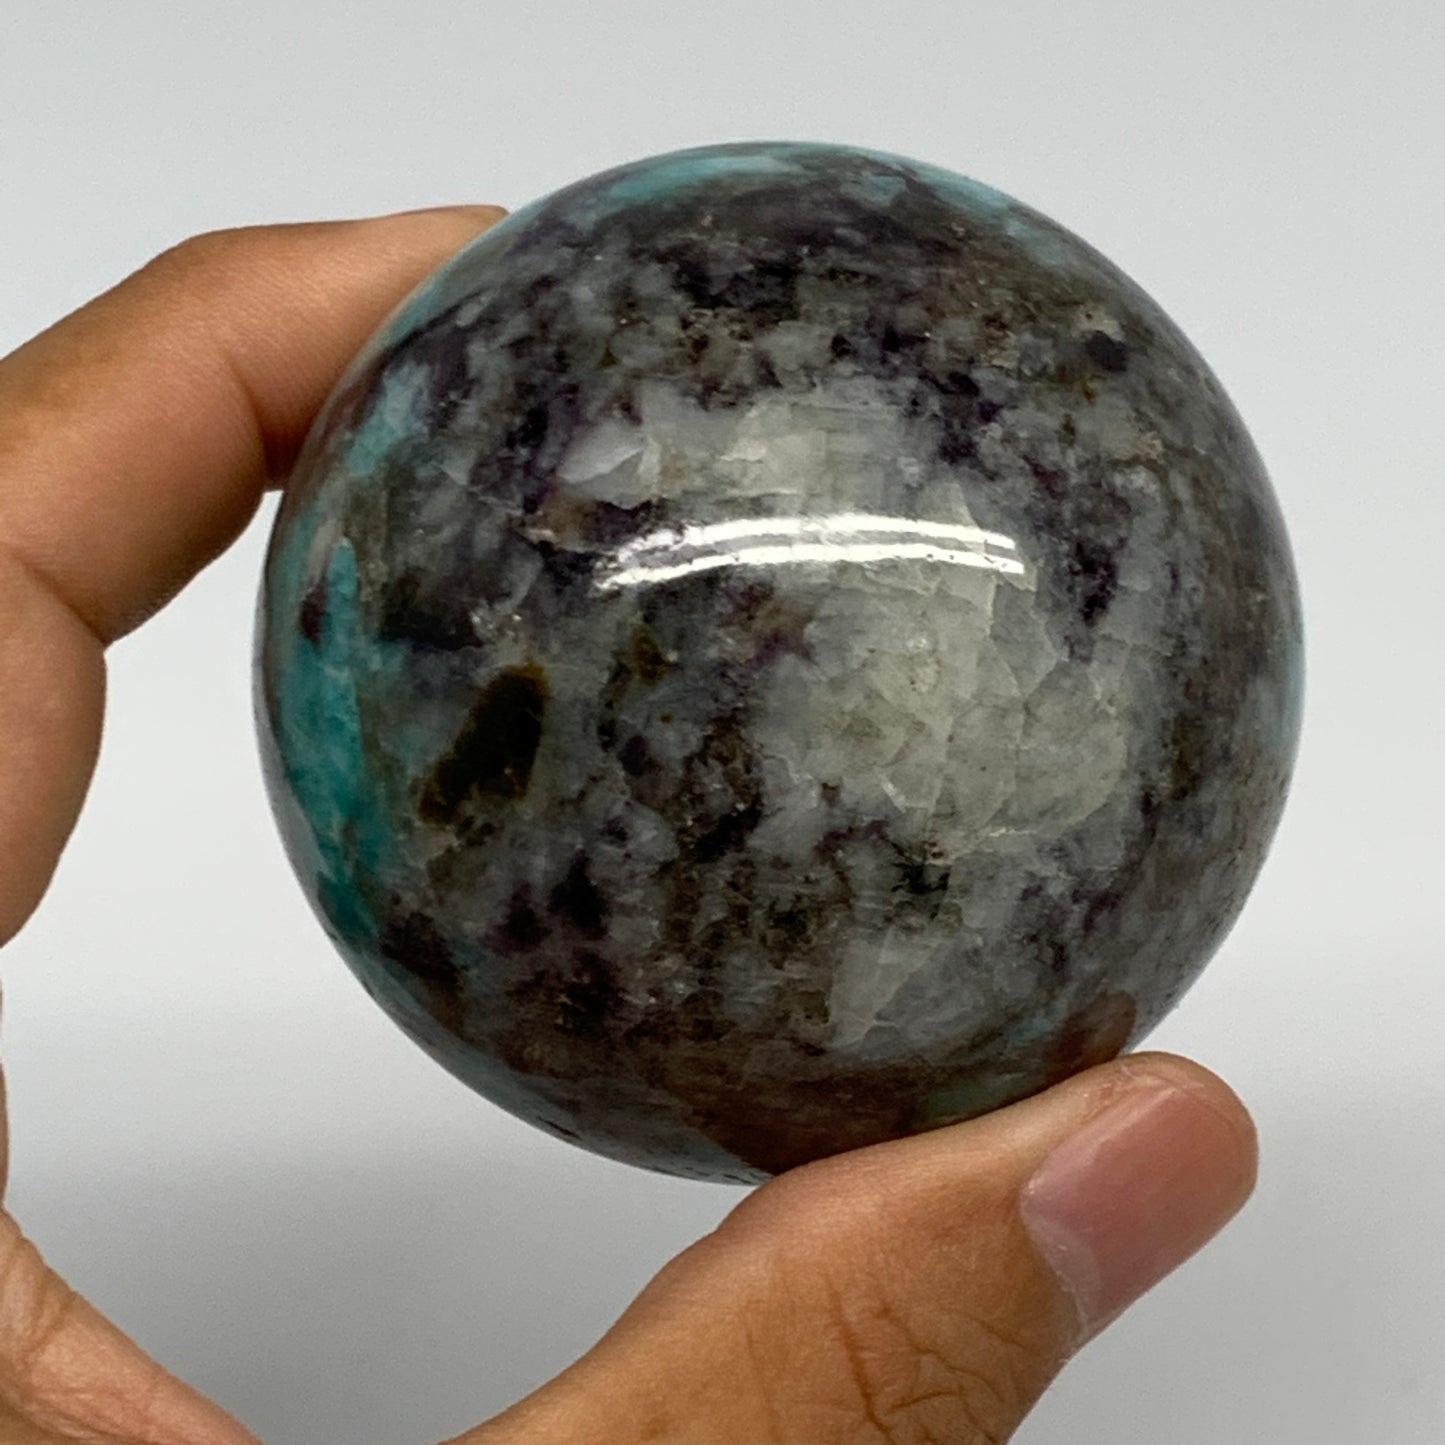 287g, 2.3" Amazonite Smoky Quartz Sphere Ball Gemstone from Madagascar,B14585